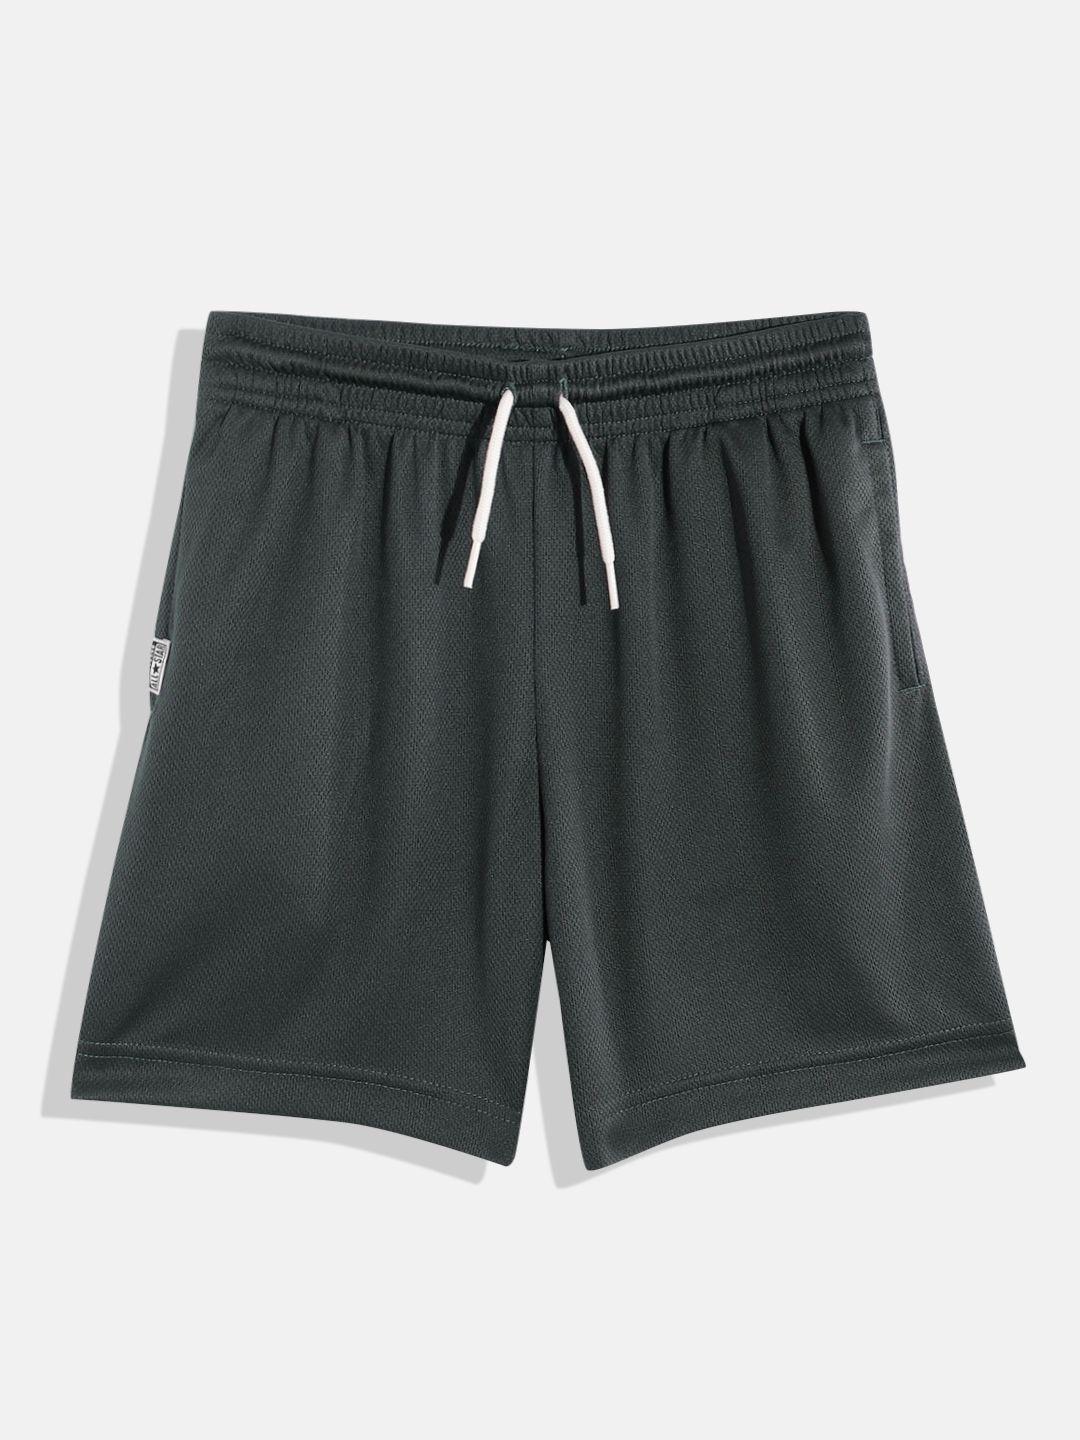 converse-boys-grey-shorts